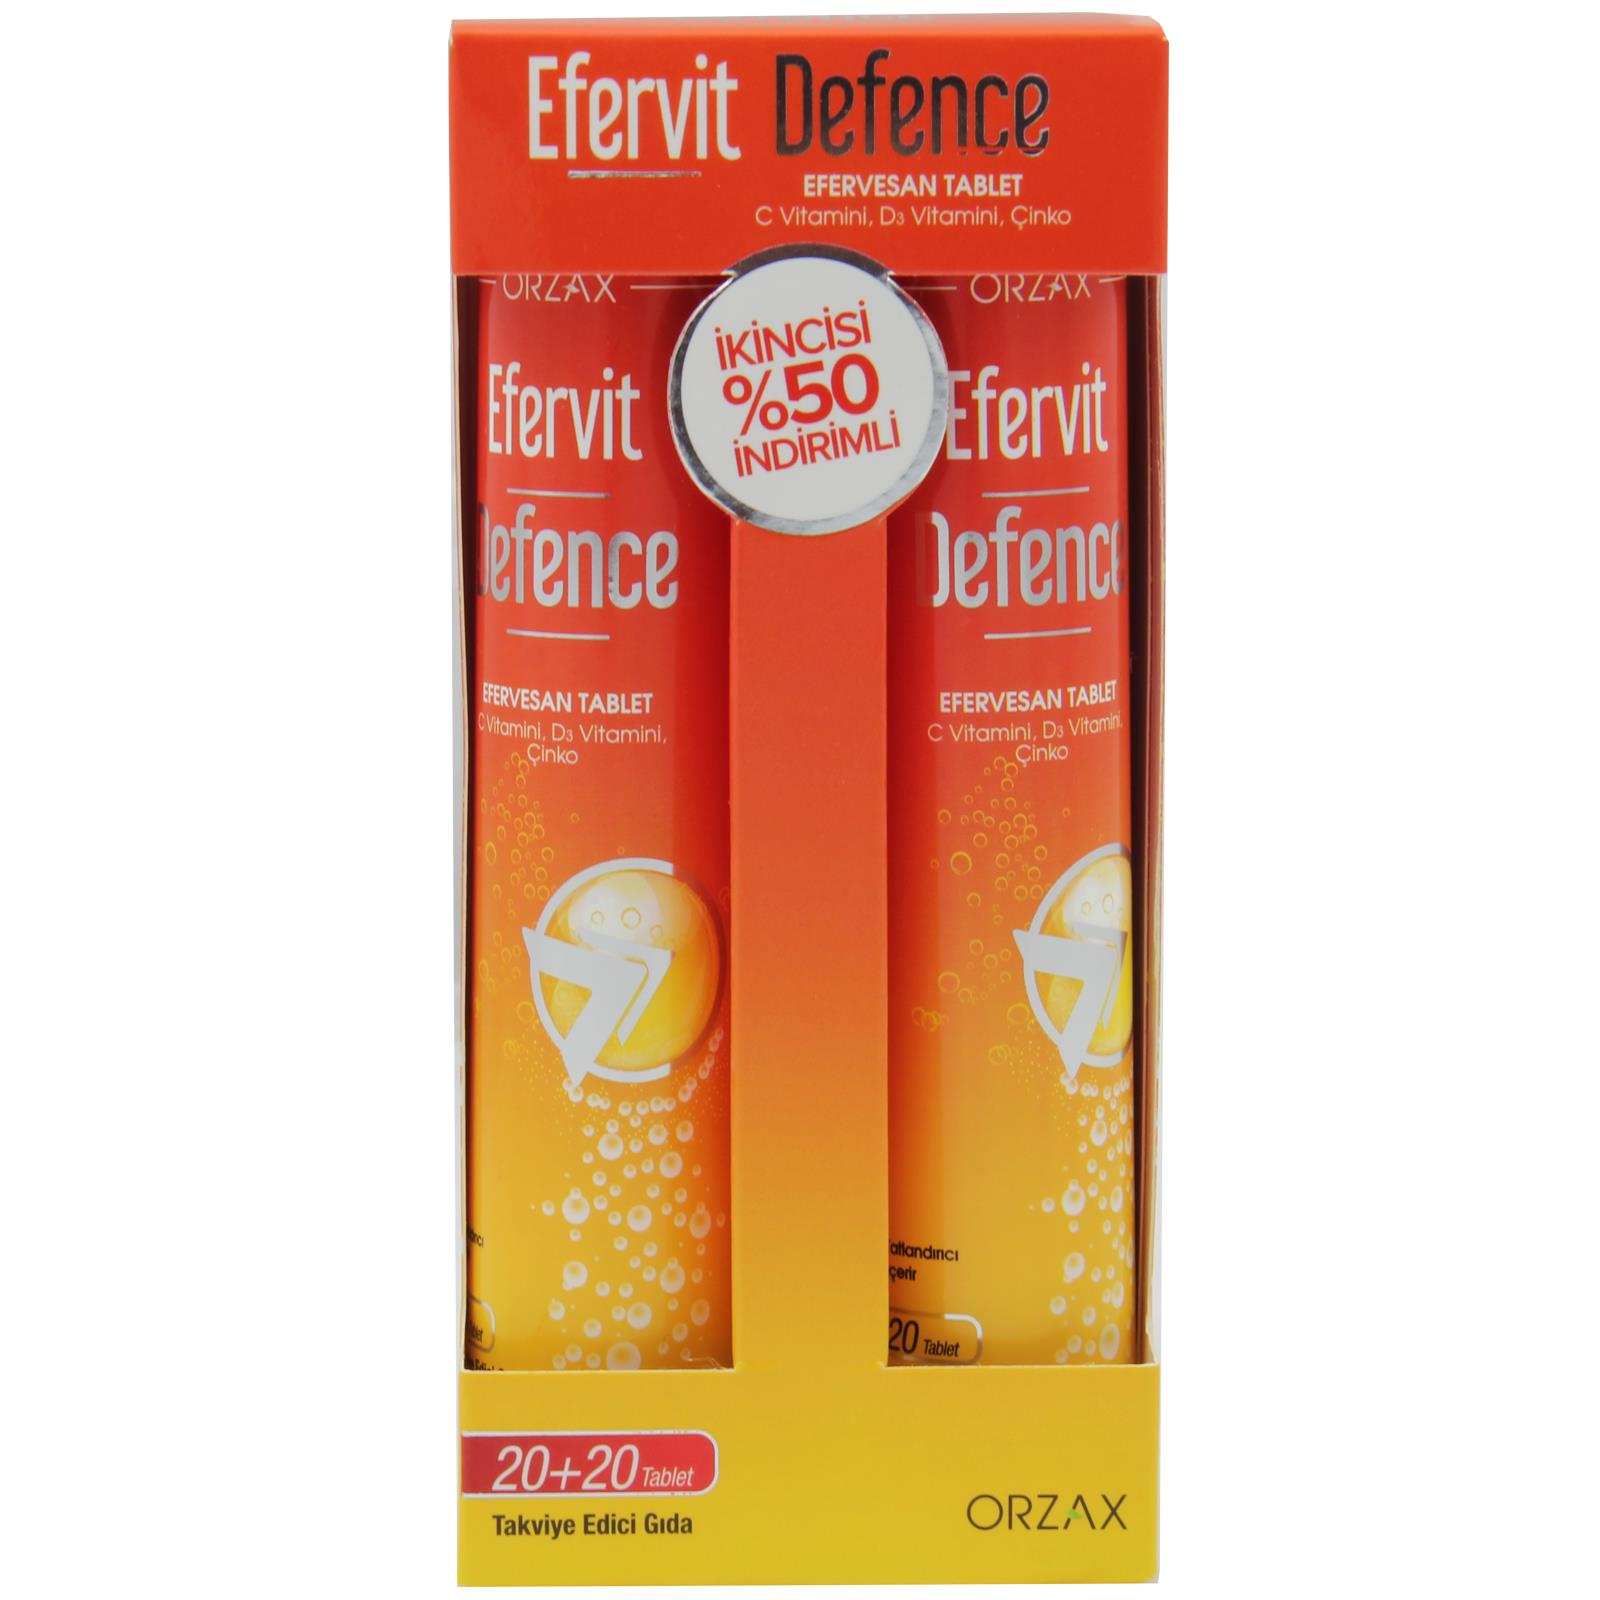 Orzax Efervit Defence C Vitamini D3 Vitamini Ve Çinko 2 X 20 Efervesan Tablet